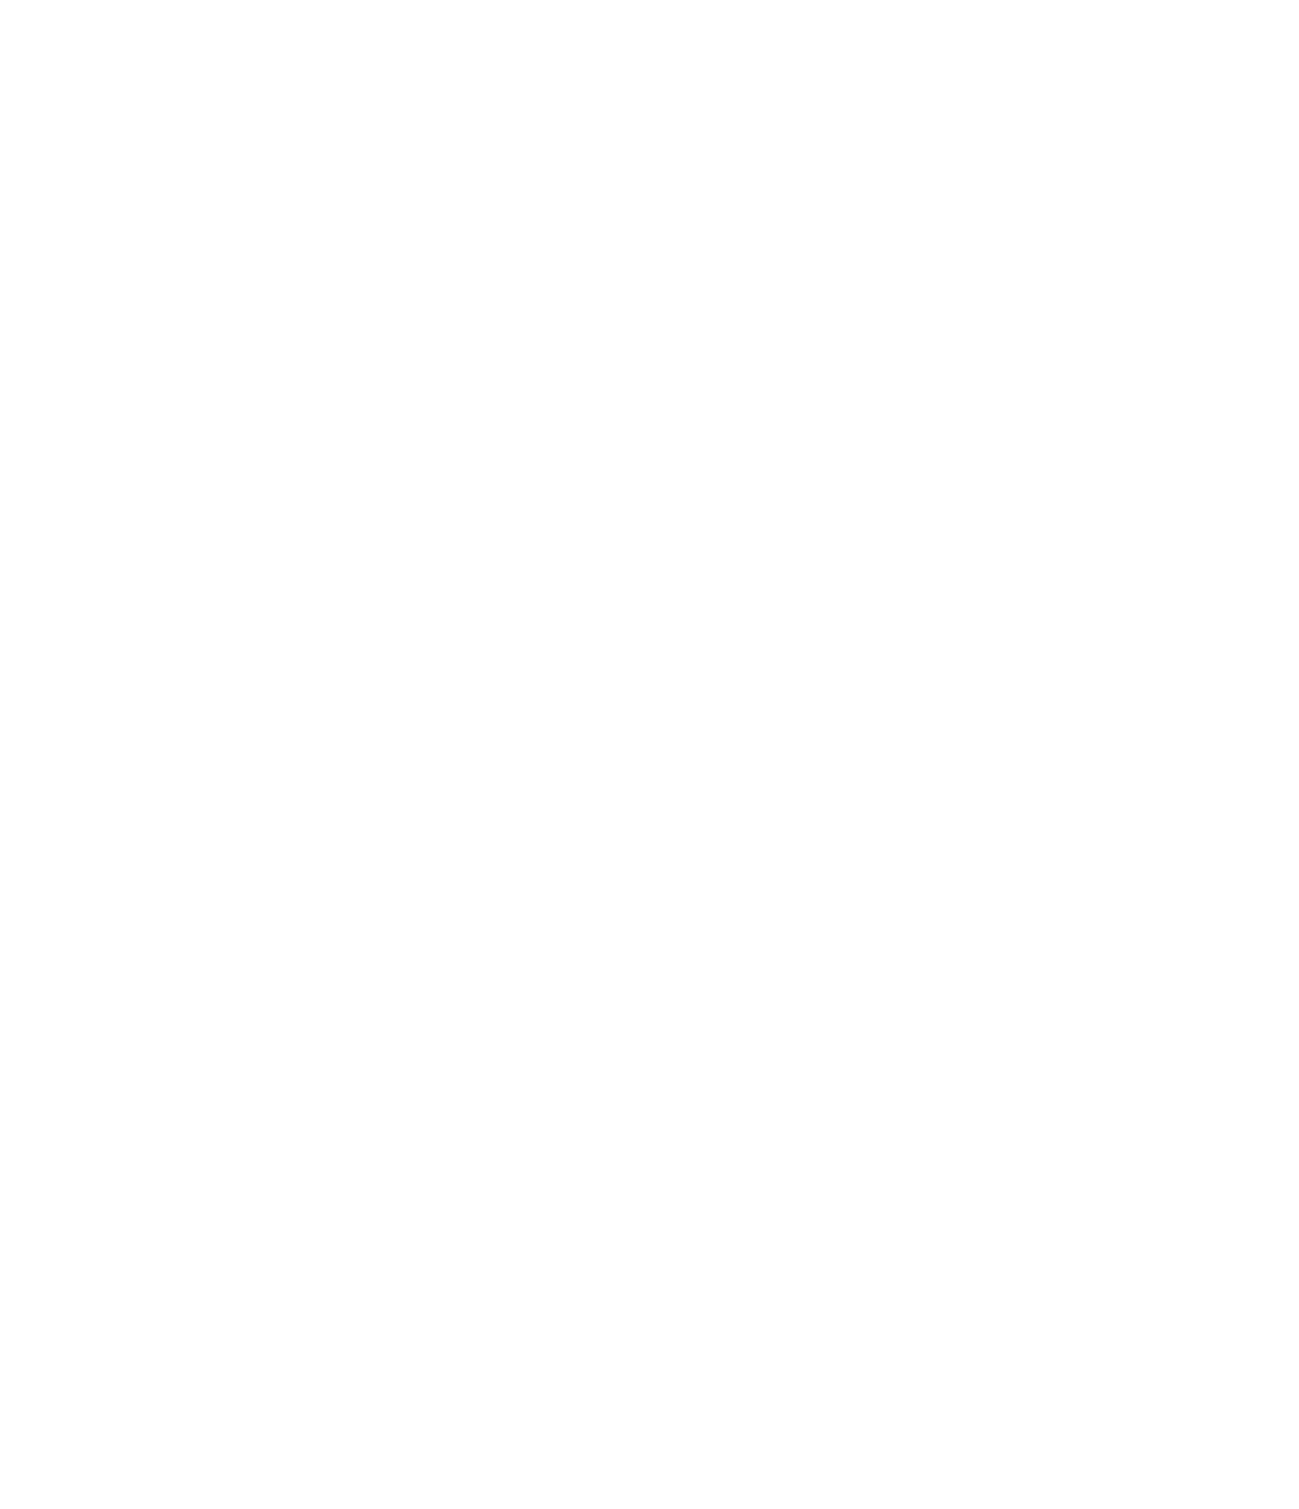 Kvika banki logo for dark backgrounds (transparent PNG)